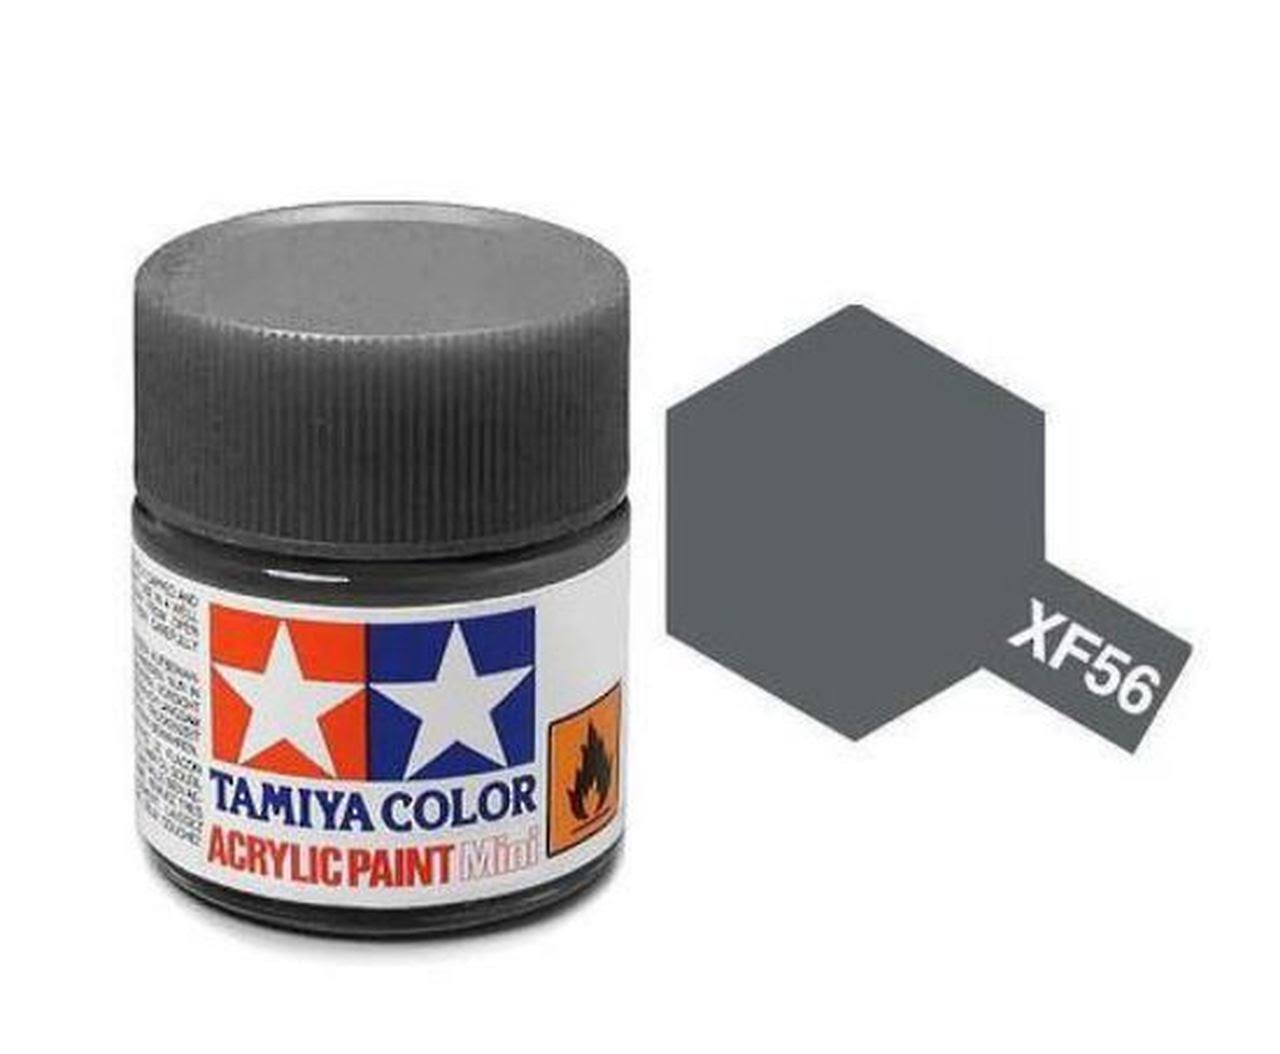 Tamiya Xf56 Metallic Acrylic Mini Paint - Gray, 10ml